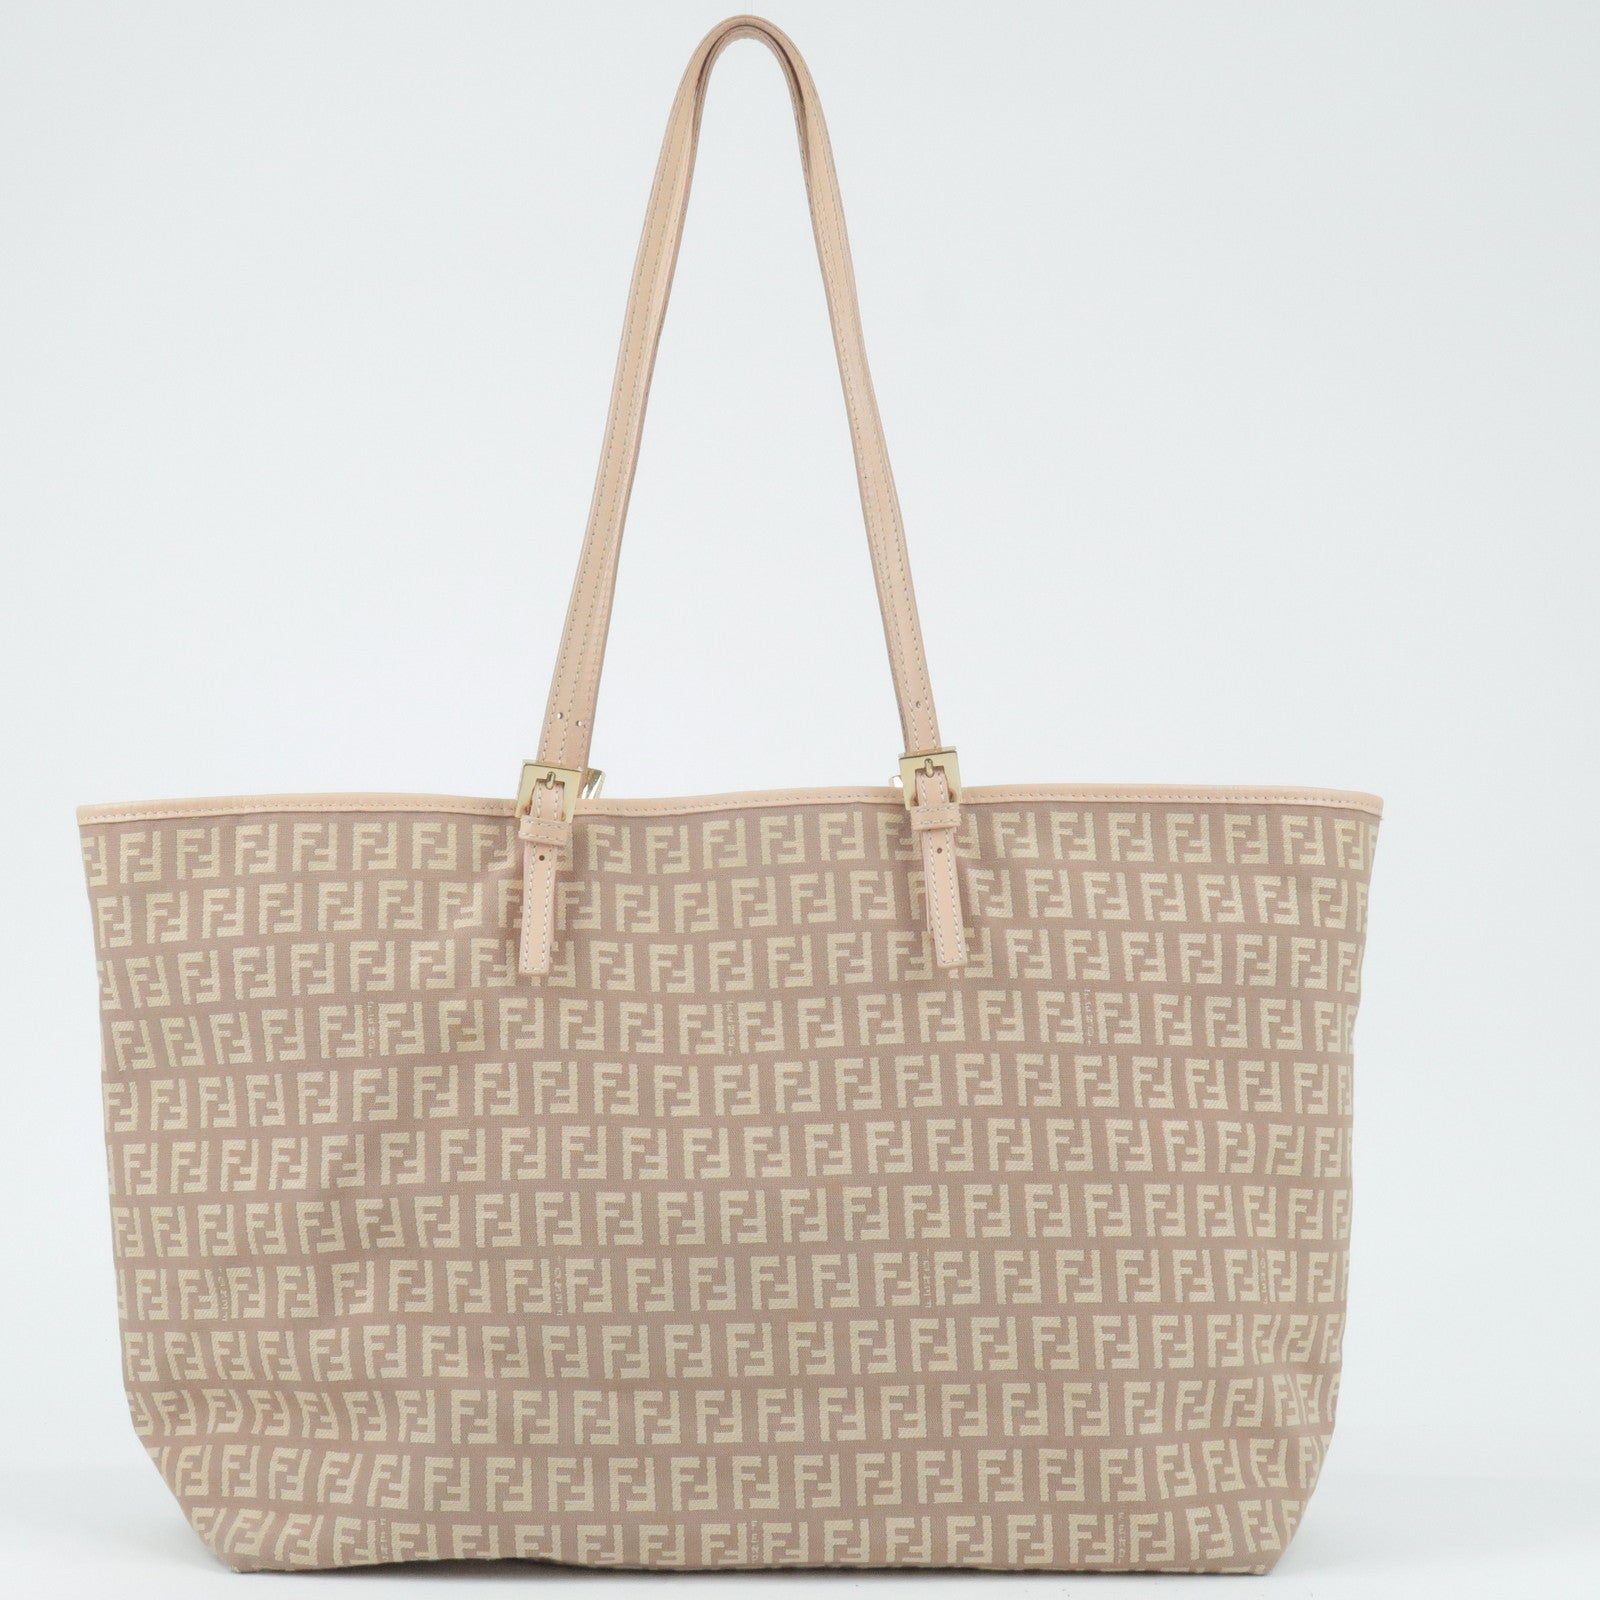 FENDI: Baguette bag in leather - Pink | FENDI crossbody bags 8BS048 AAIW  online at GIGLIO.COM